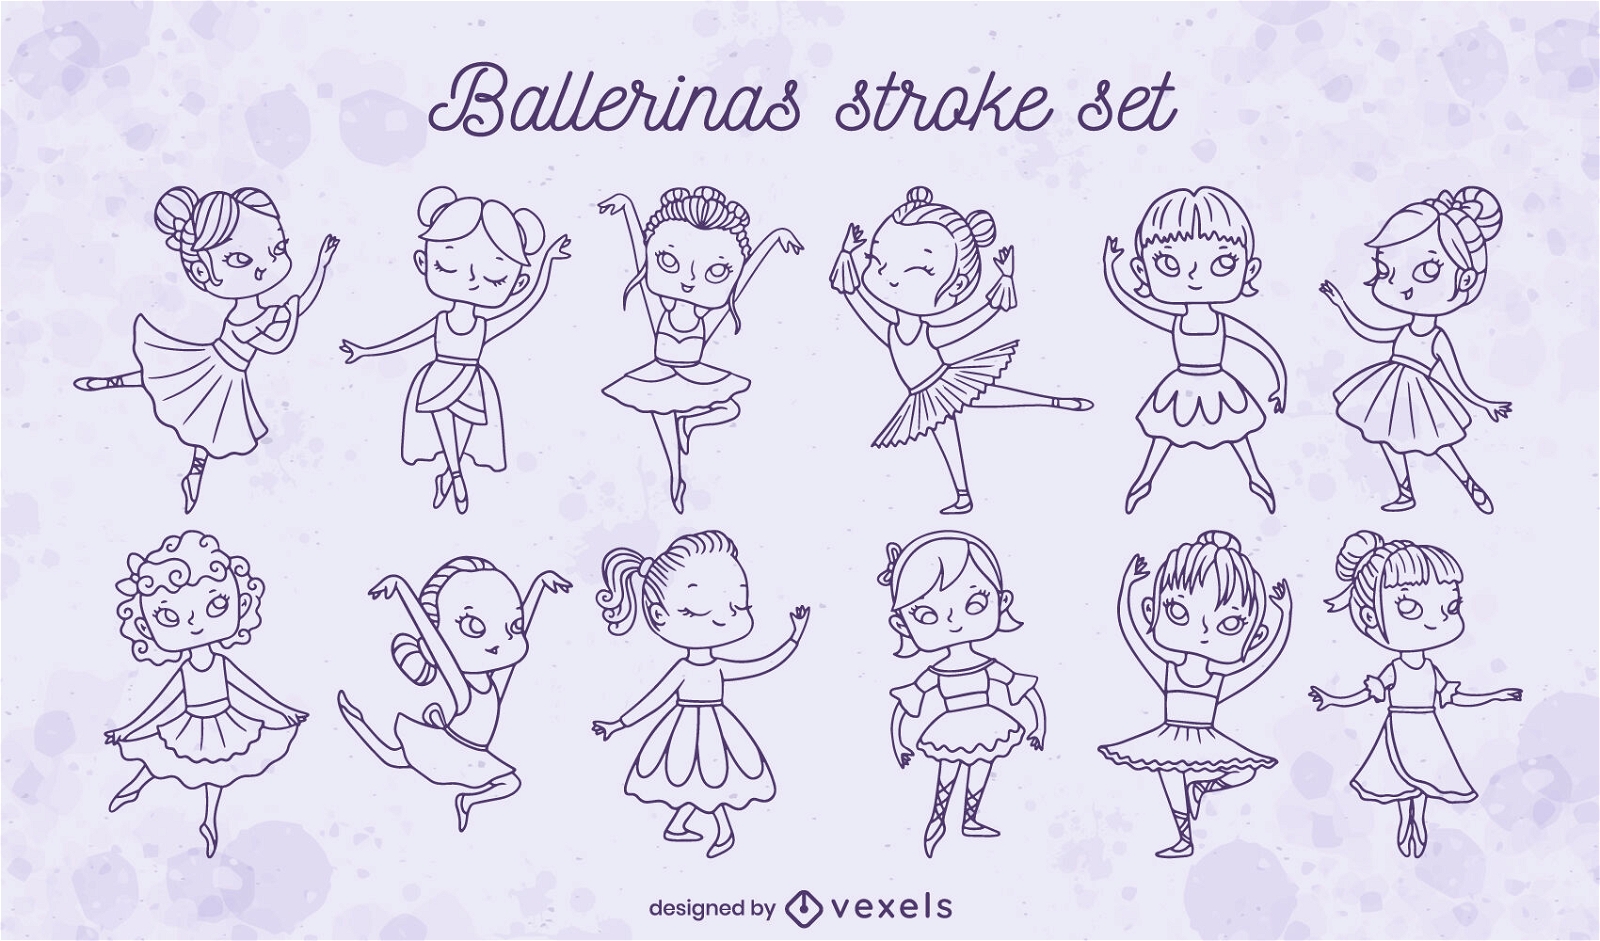 Ballerinas stroke set